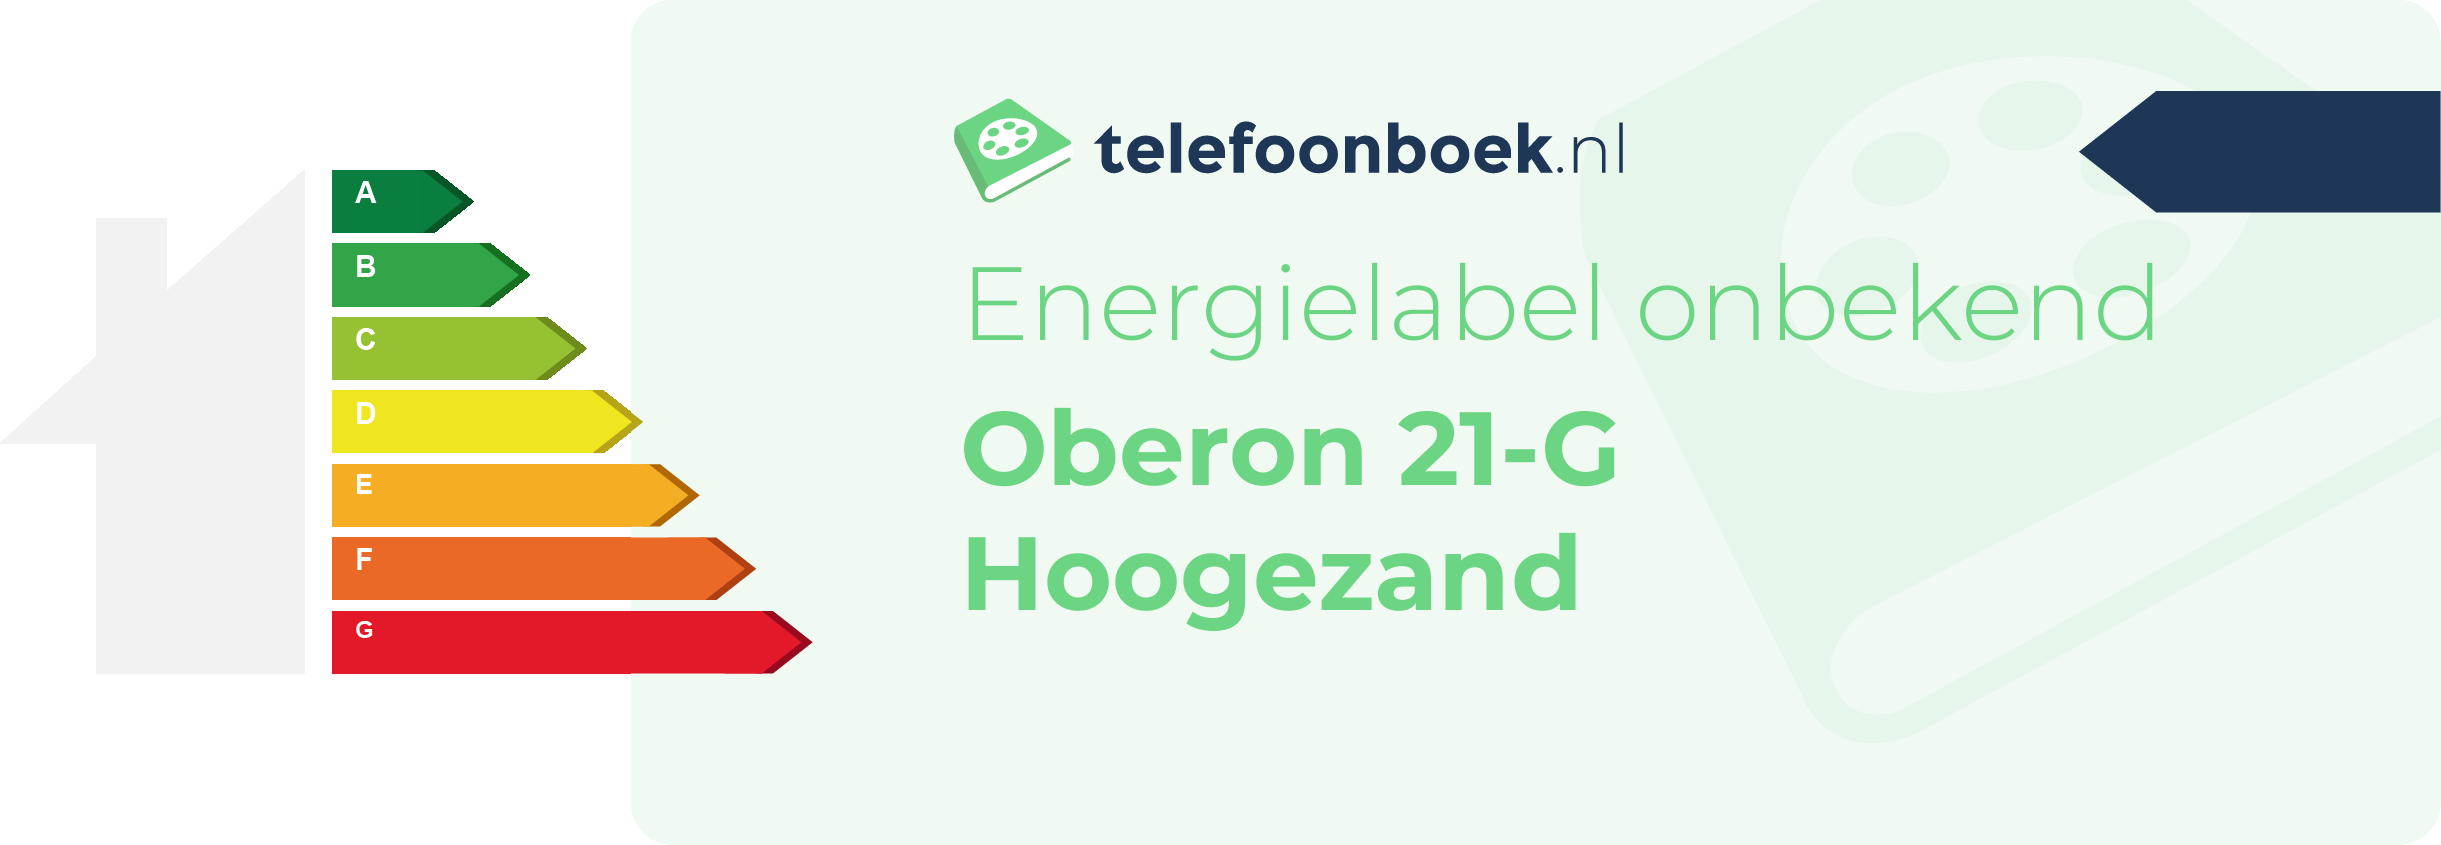 Energielabel Oberon 21-G Hoogezand